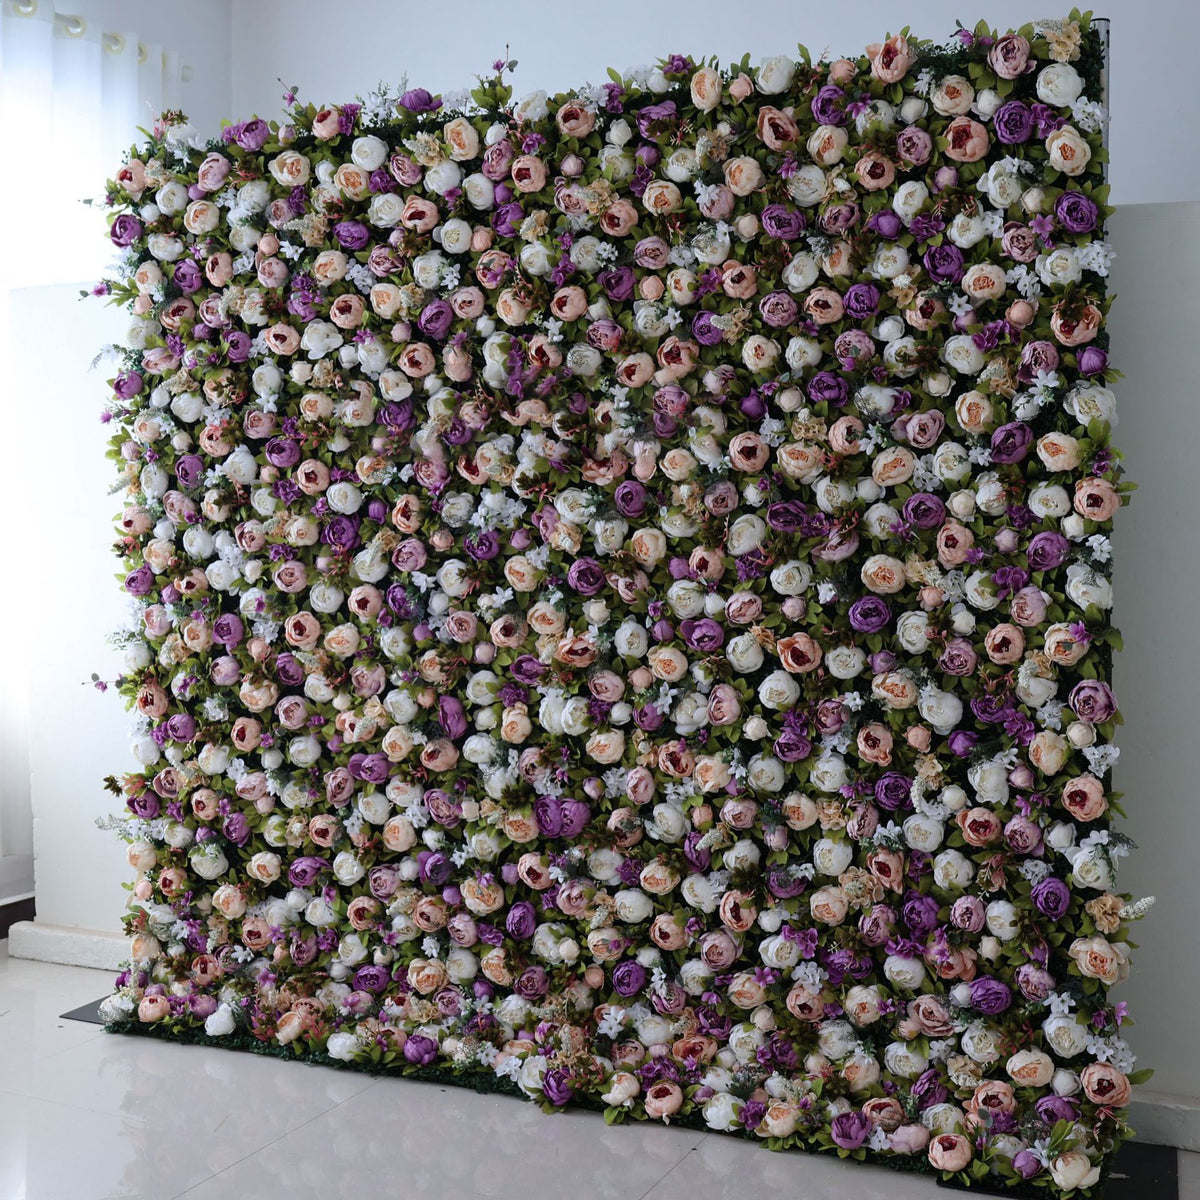 3D Artificial Flower Wall Arrangement Wedding Party Birthday Backdrop Decor HQ1307